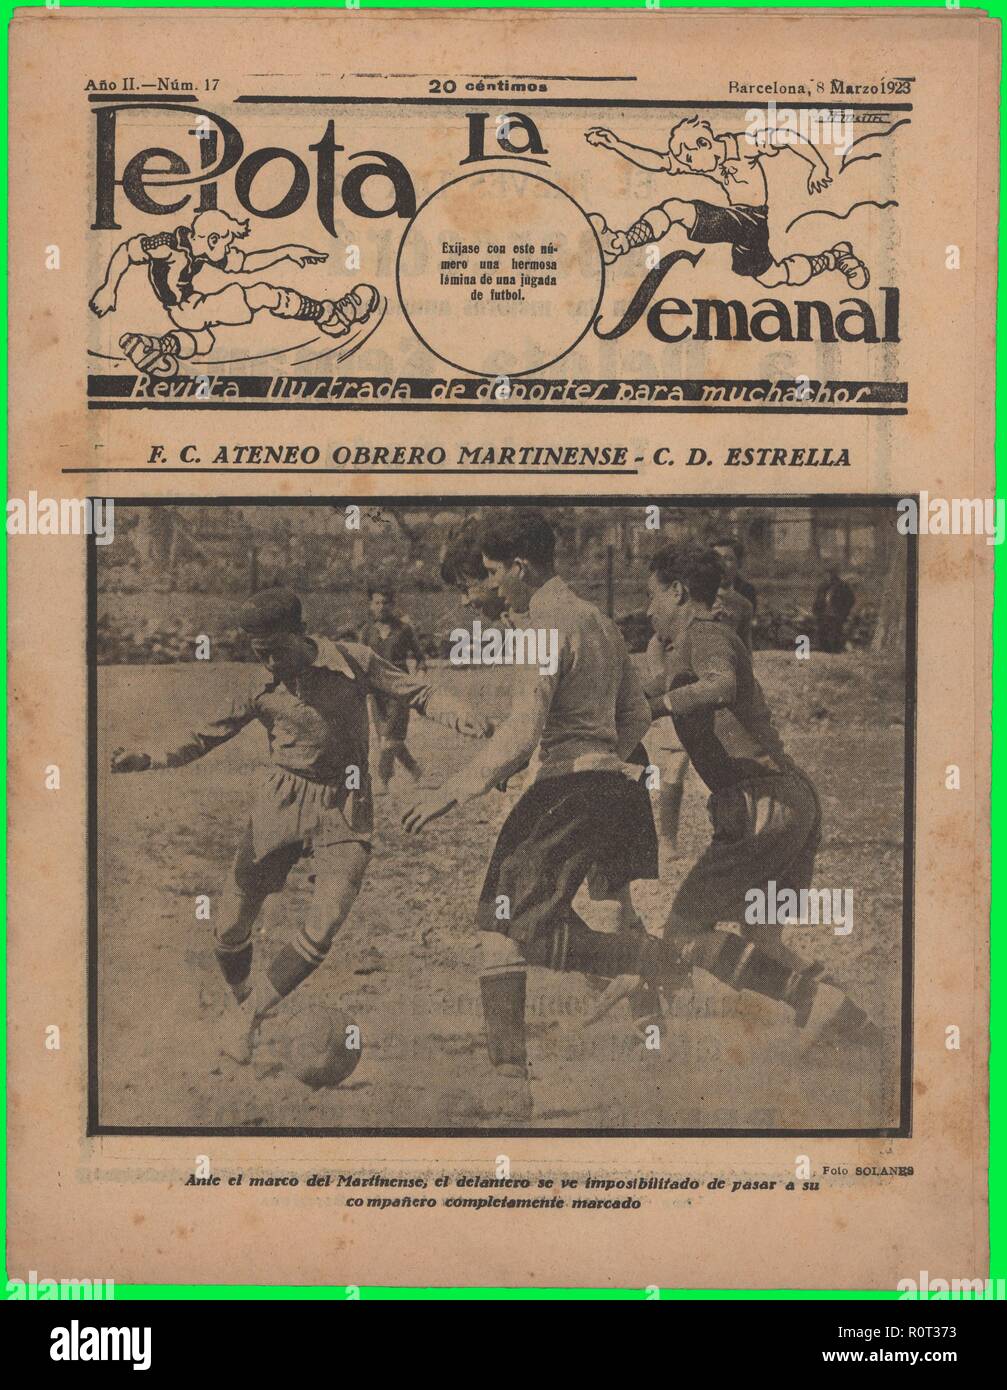 Portada de la revista de deportes La Pelota Semanal, editada en Barcelona, marzo de 1923. Stock Photo